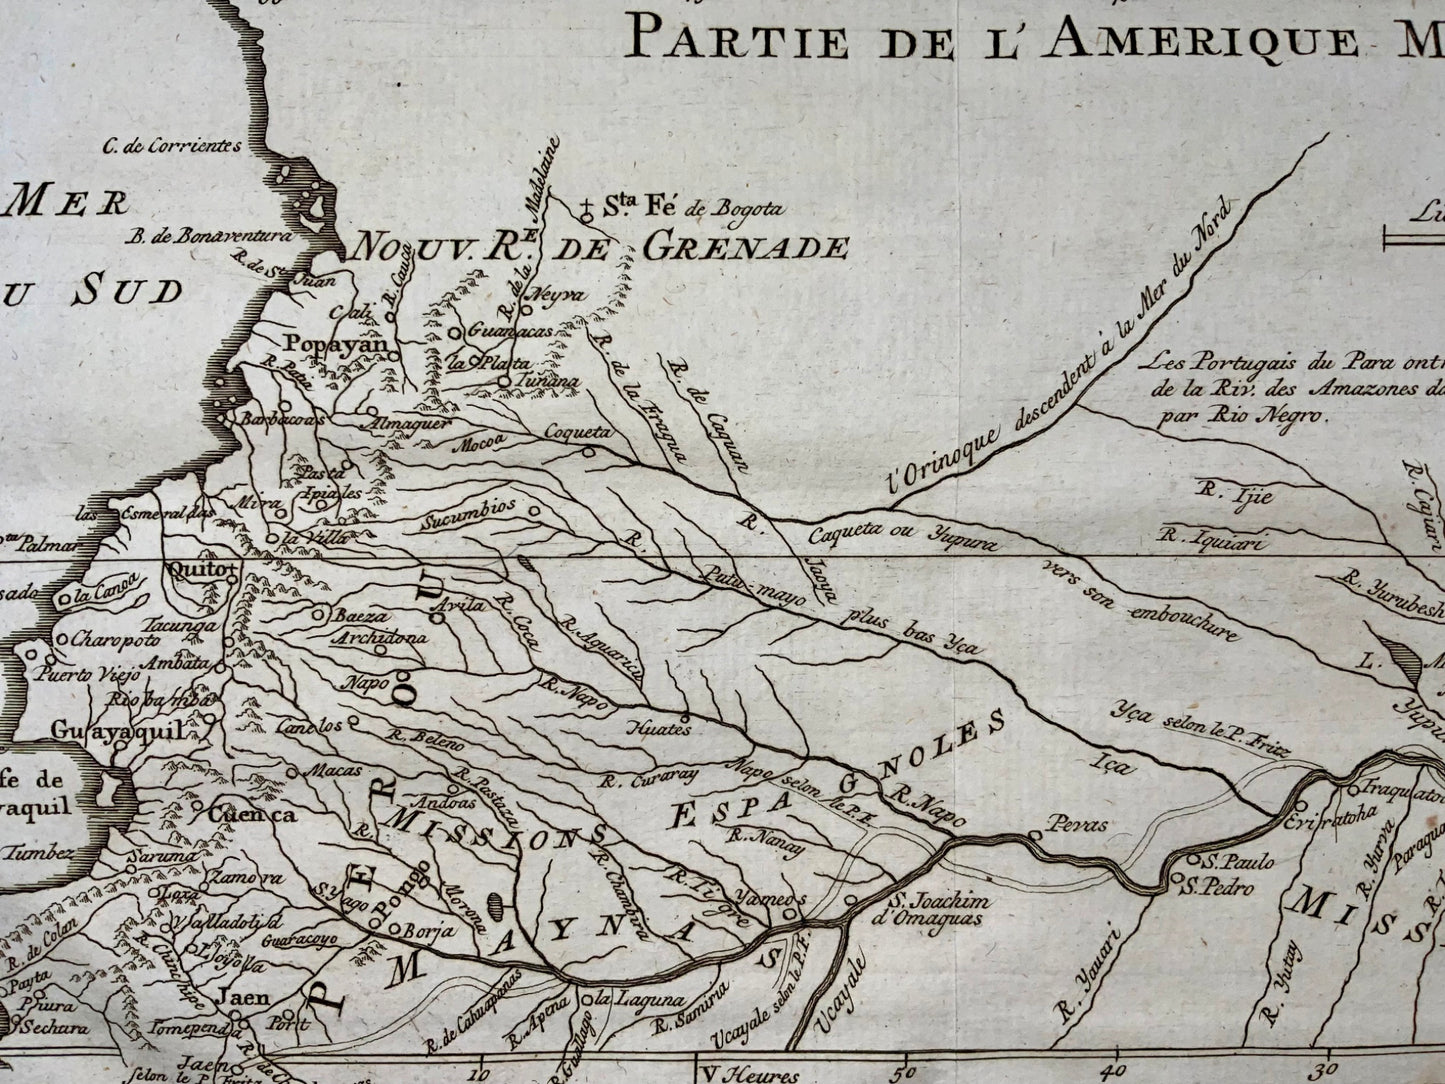 1772 Condamine, Map of the Amazon River, South America